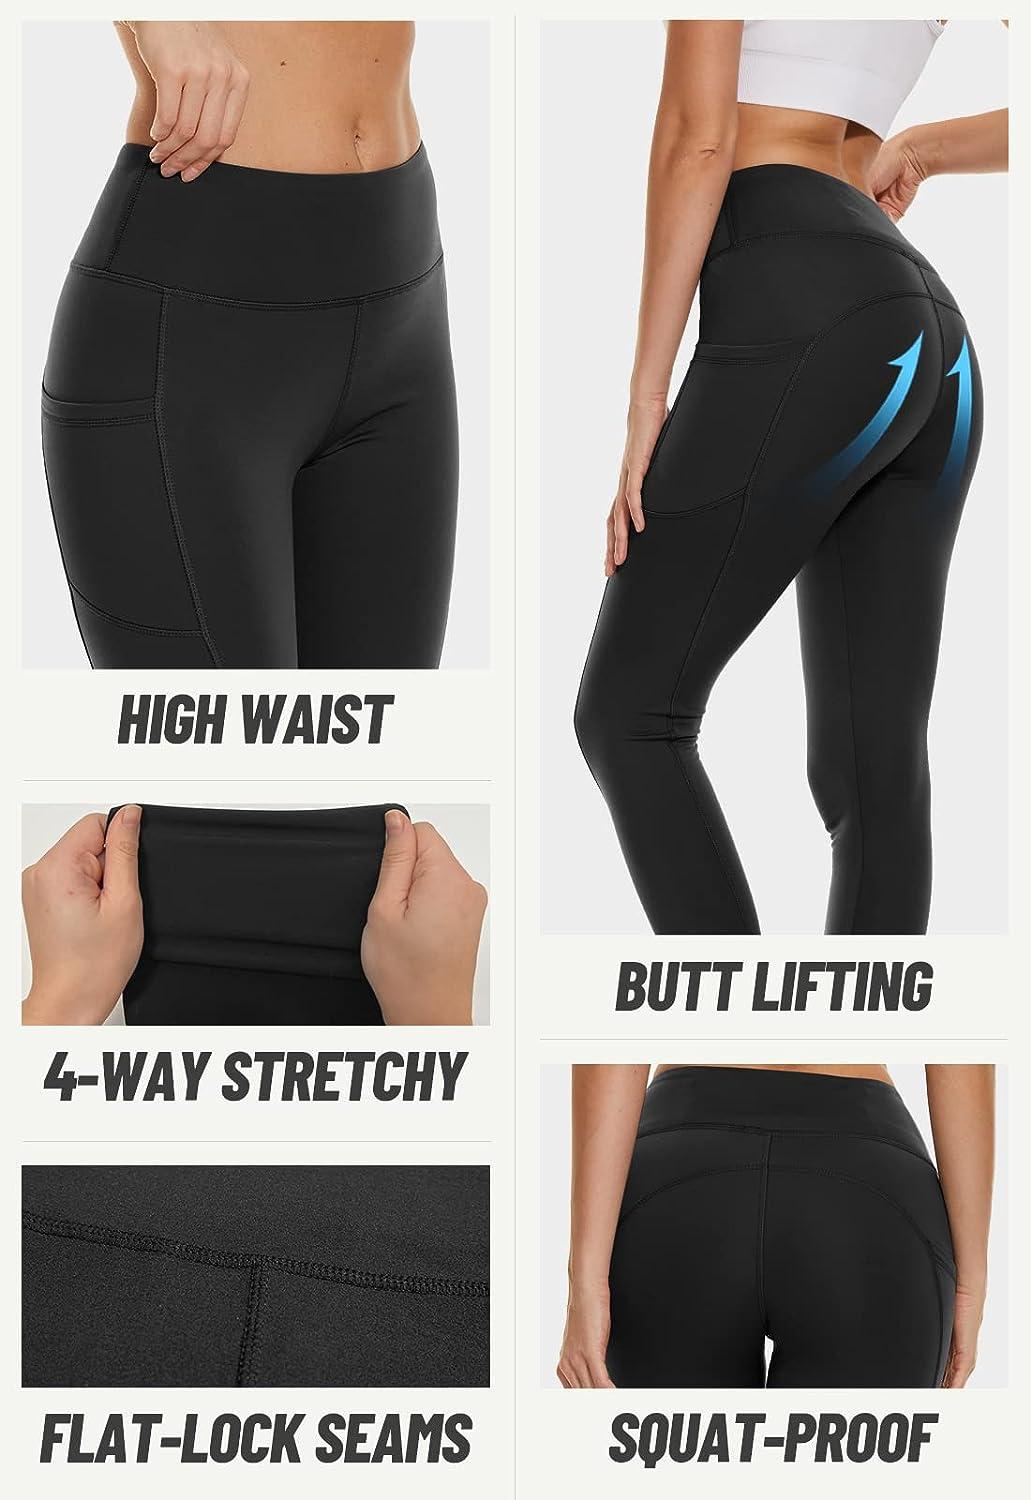 Buy GAYHAY Leggings with Pockets for Women Reg & Plus Size